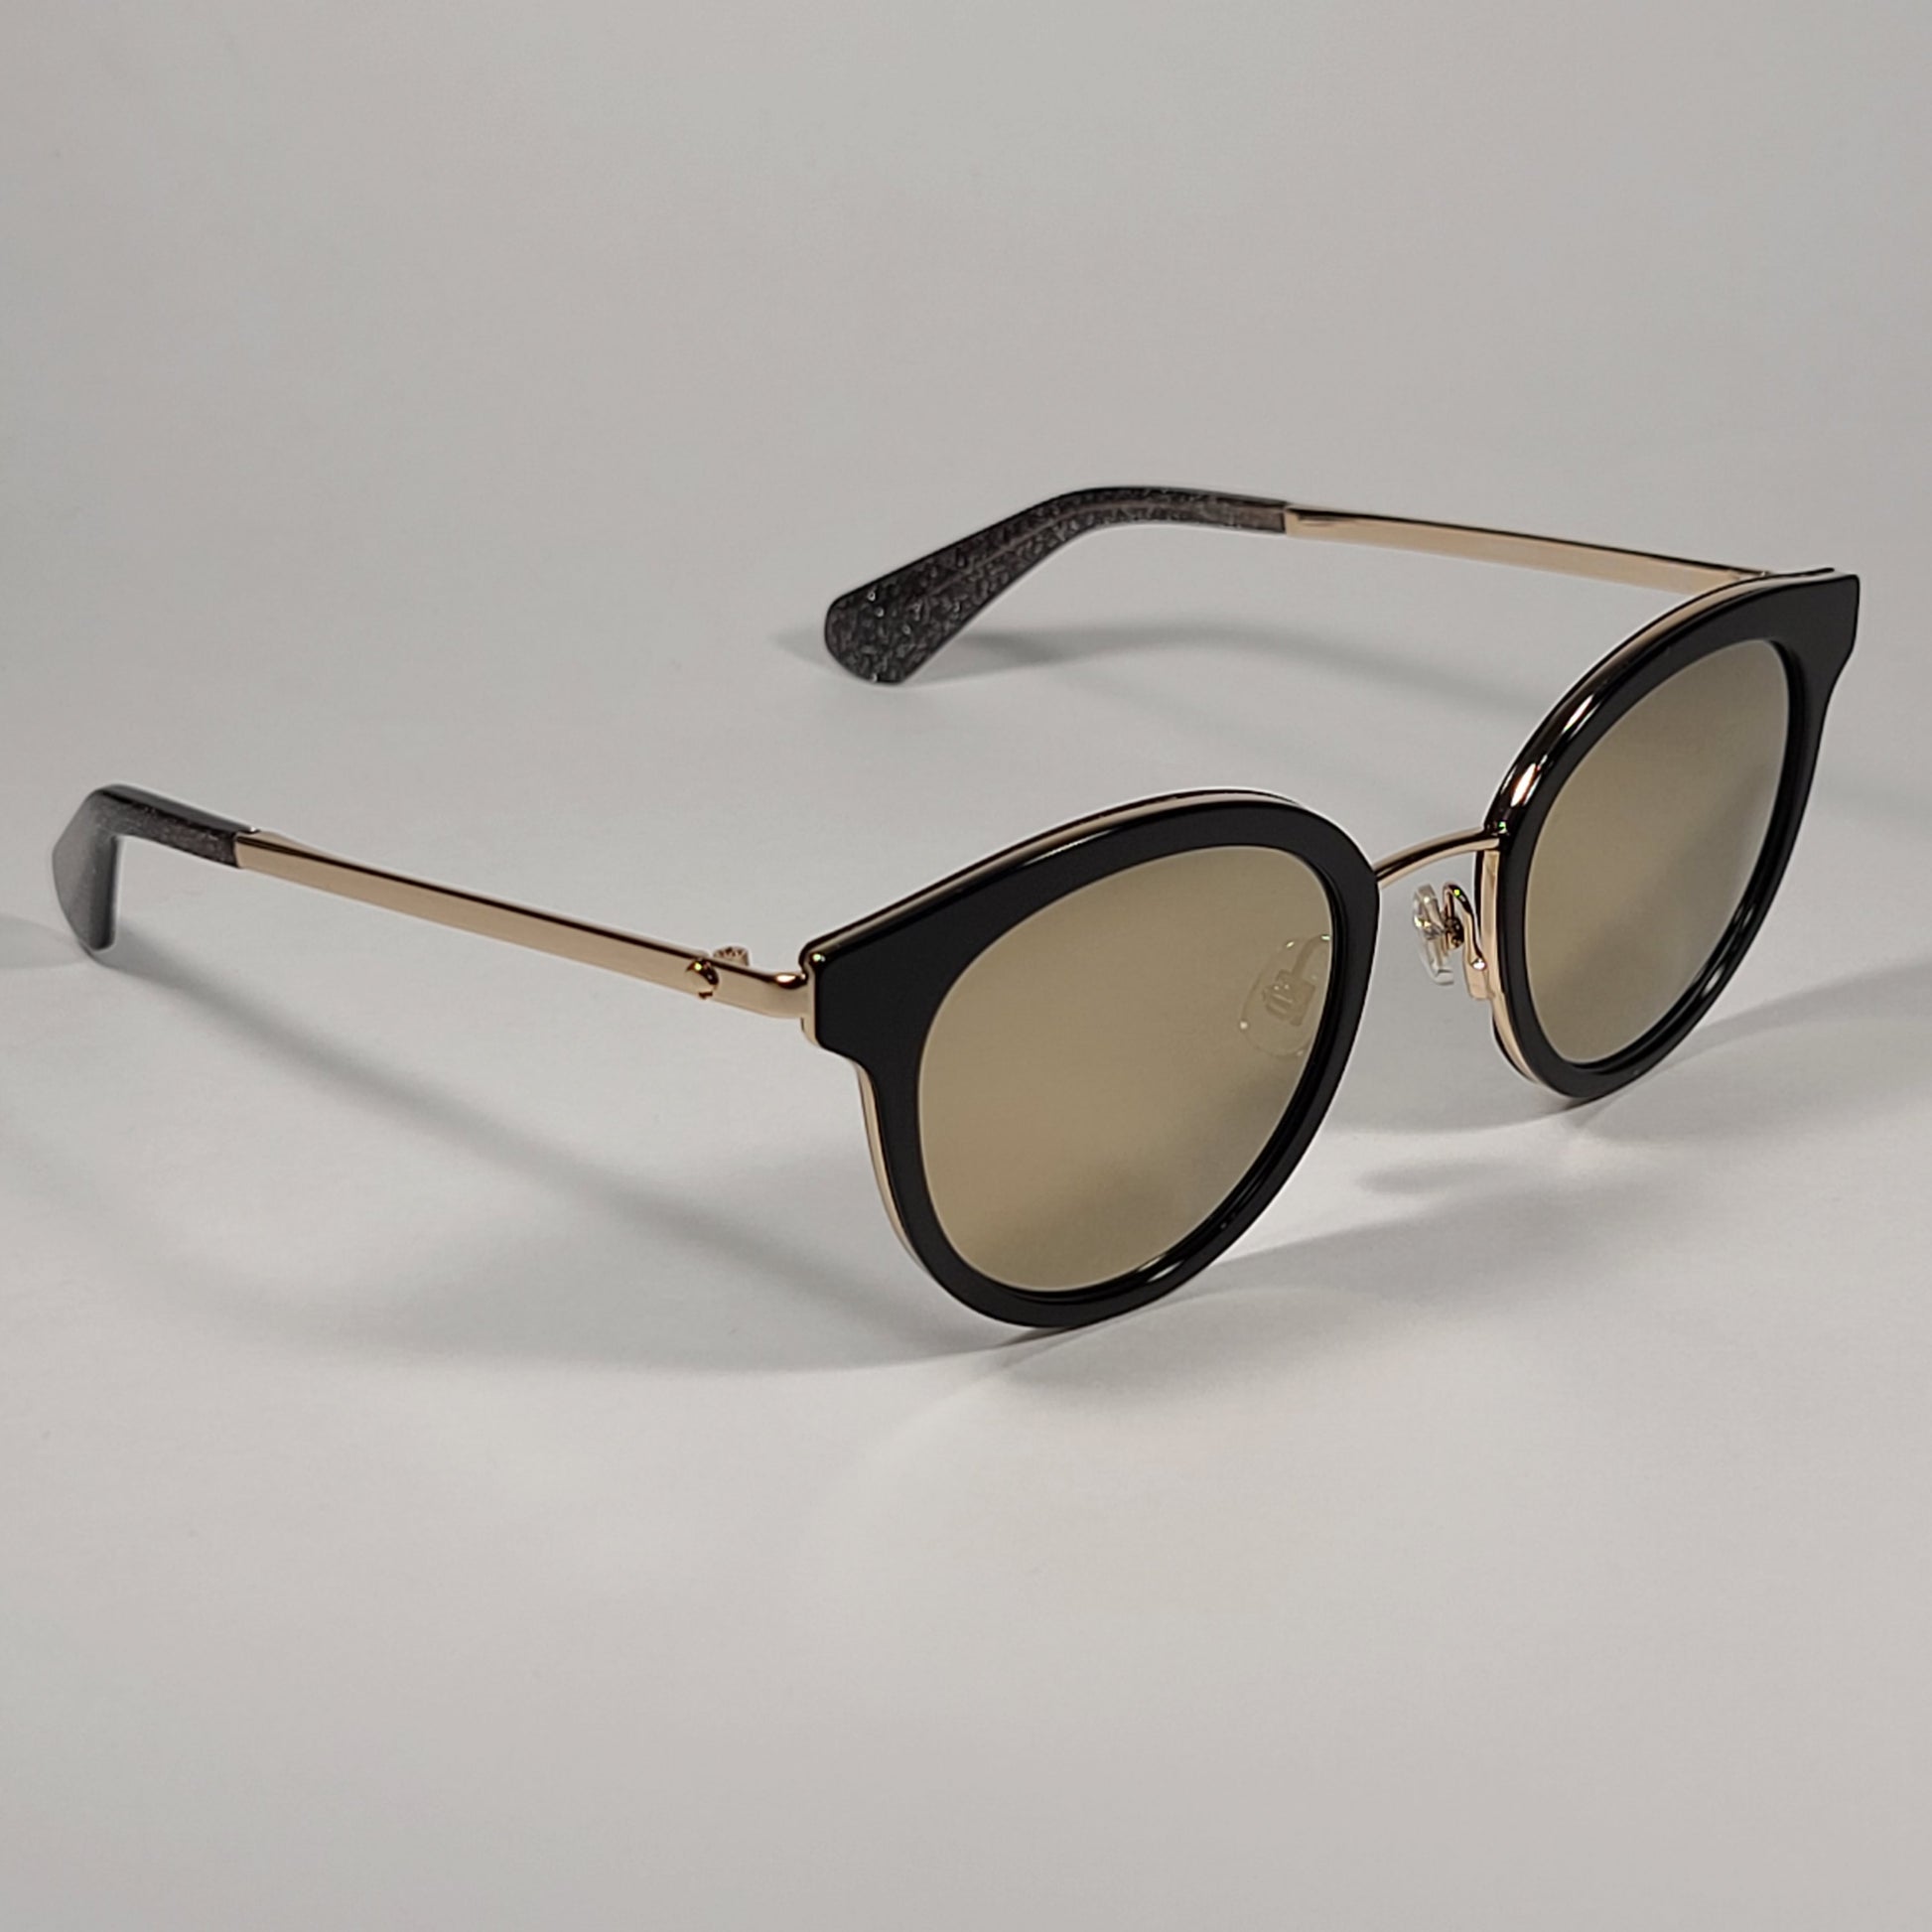 Kate Spade LISANNE/F/S 807UE Round Sunglasses Gold Black Glitter Frame Gold Mirror Lens - Sunglasses